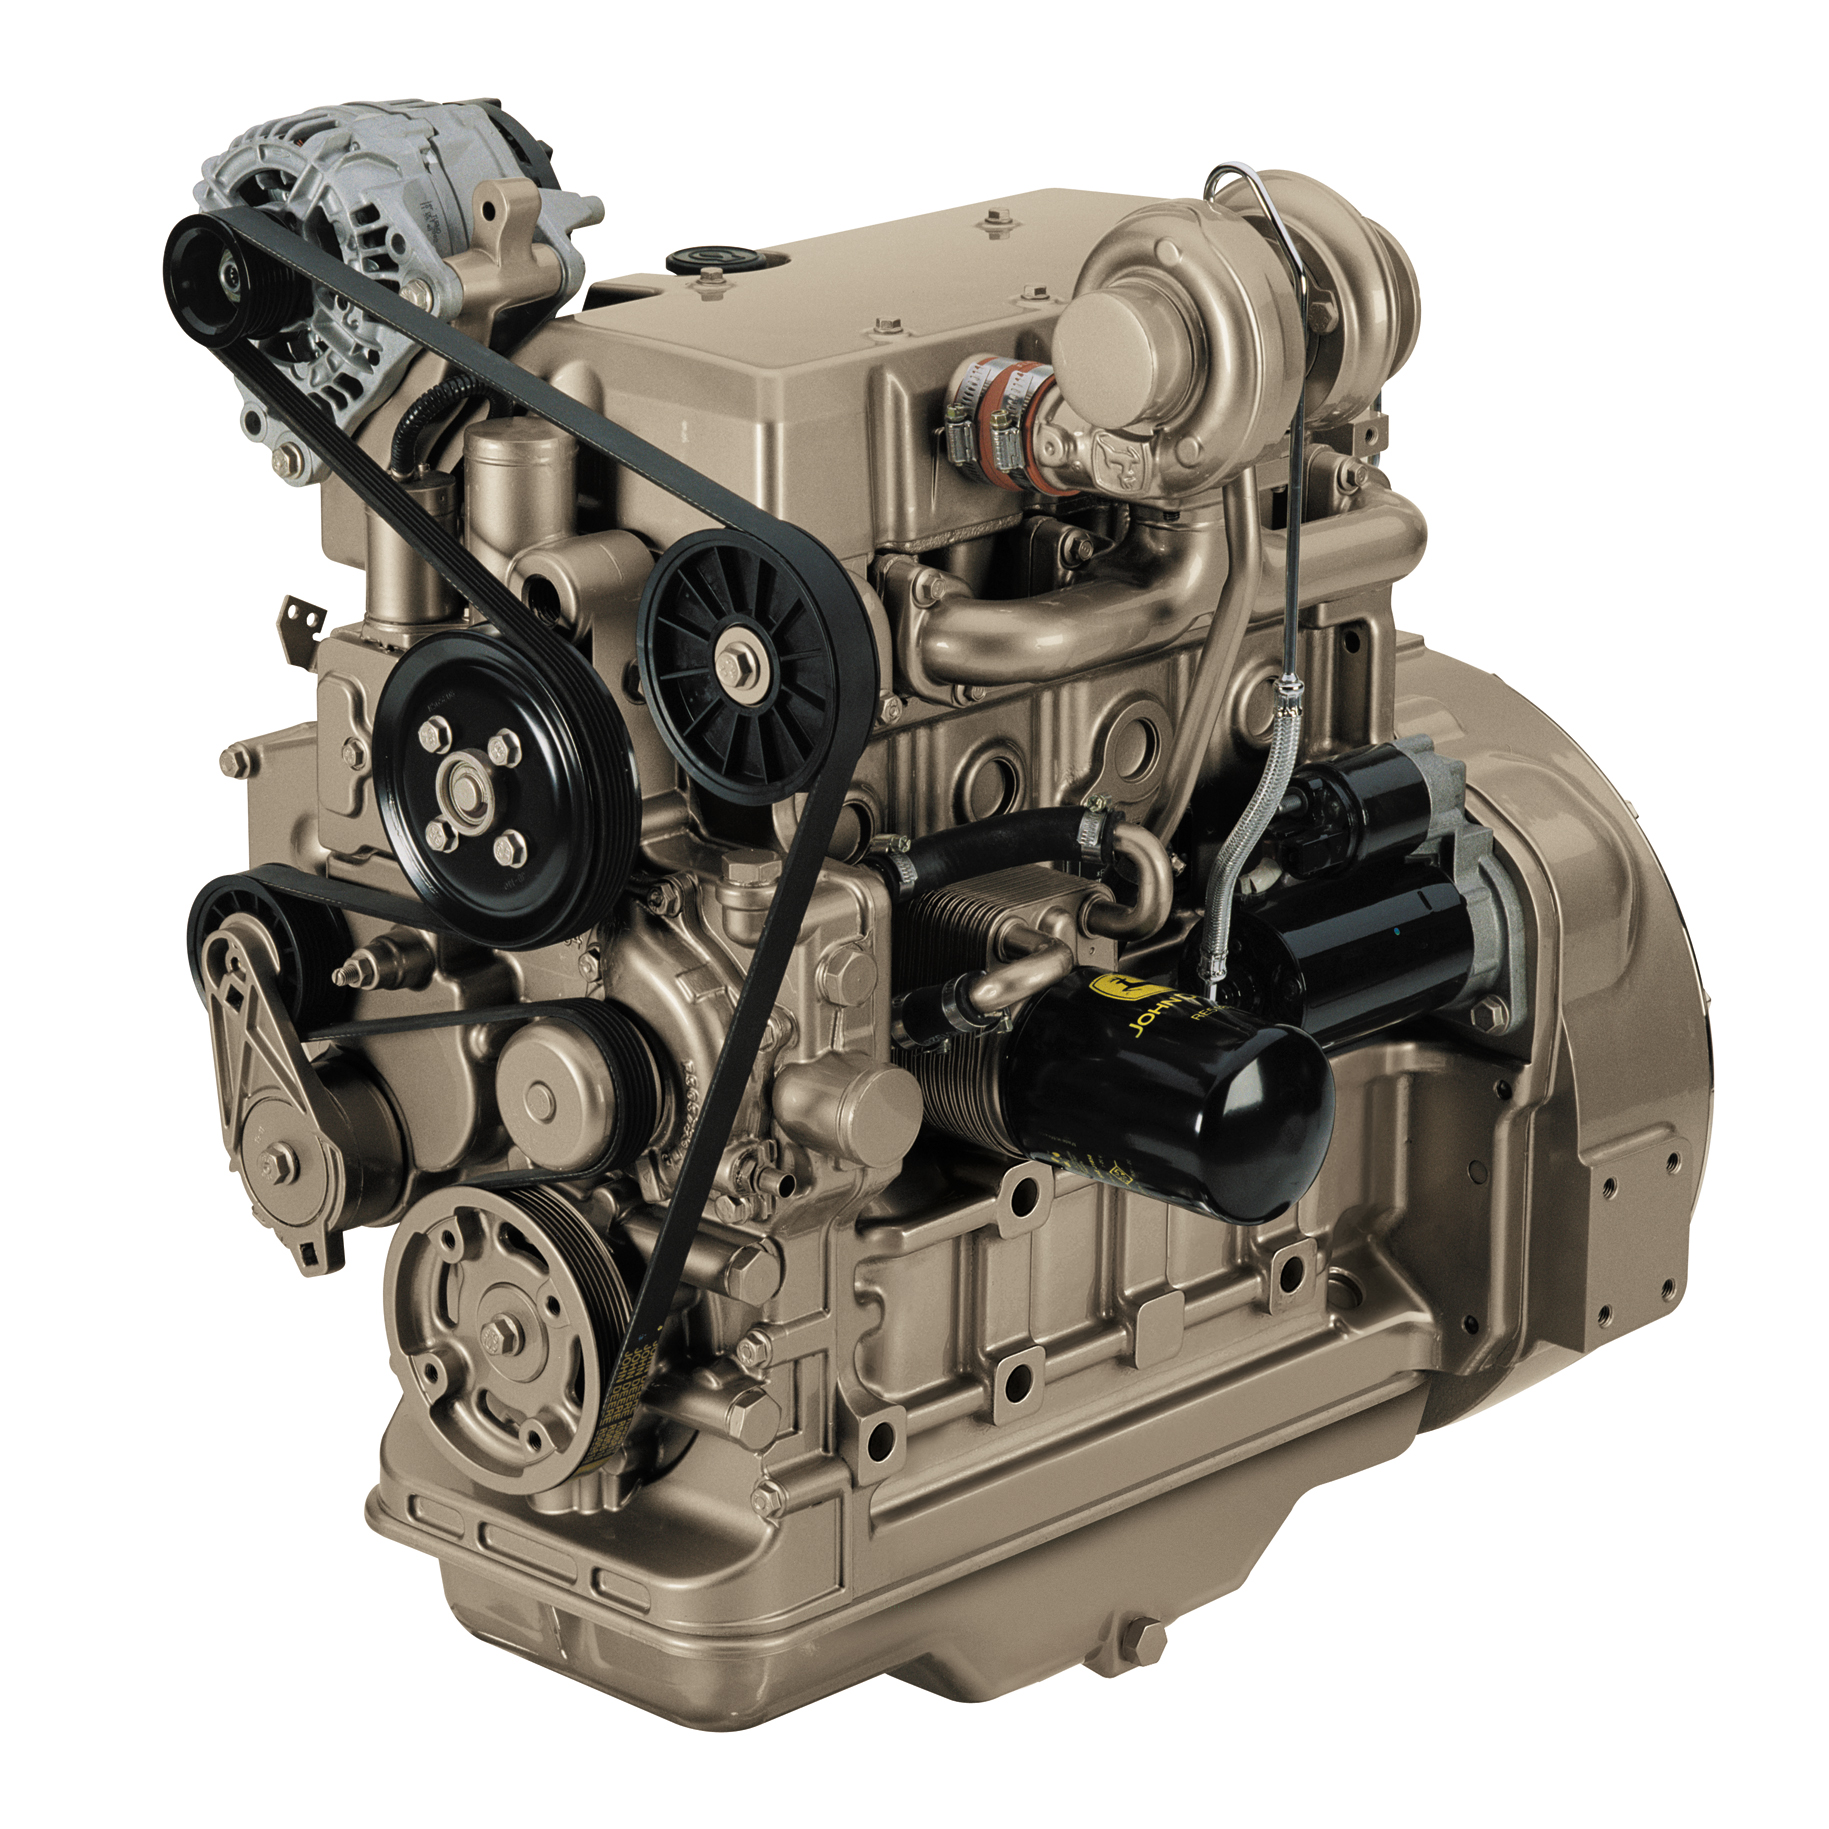 John Deere Industrial Engines Parts Service | Melton Industries